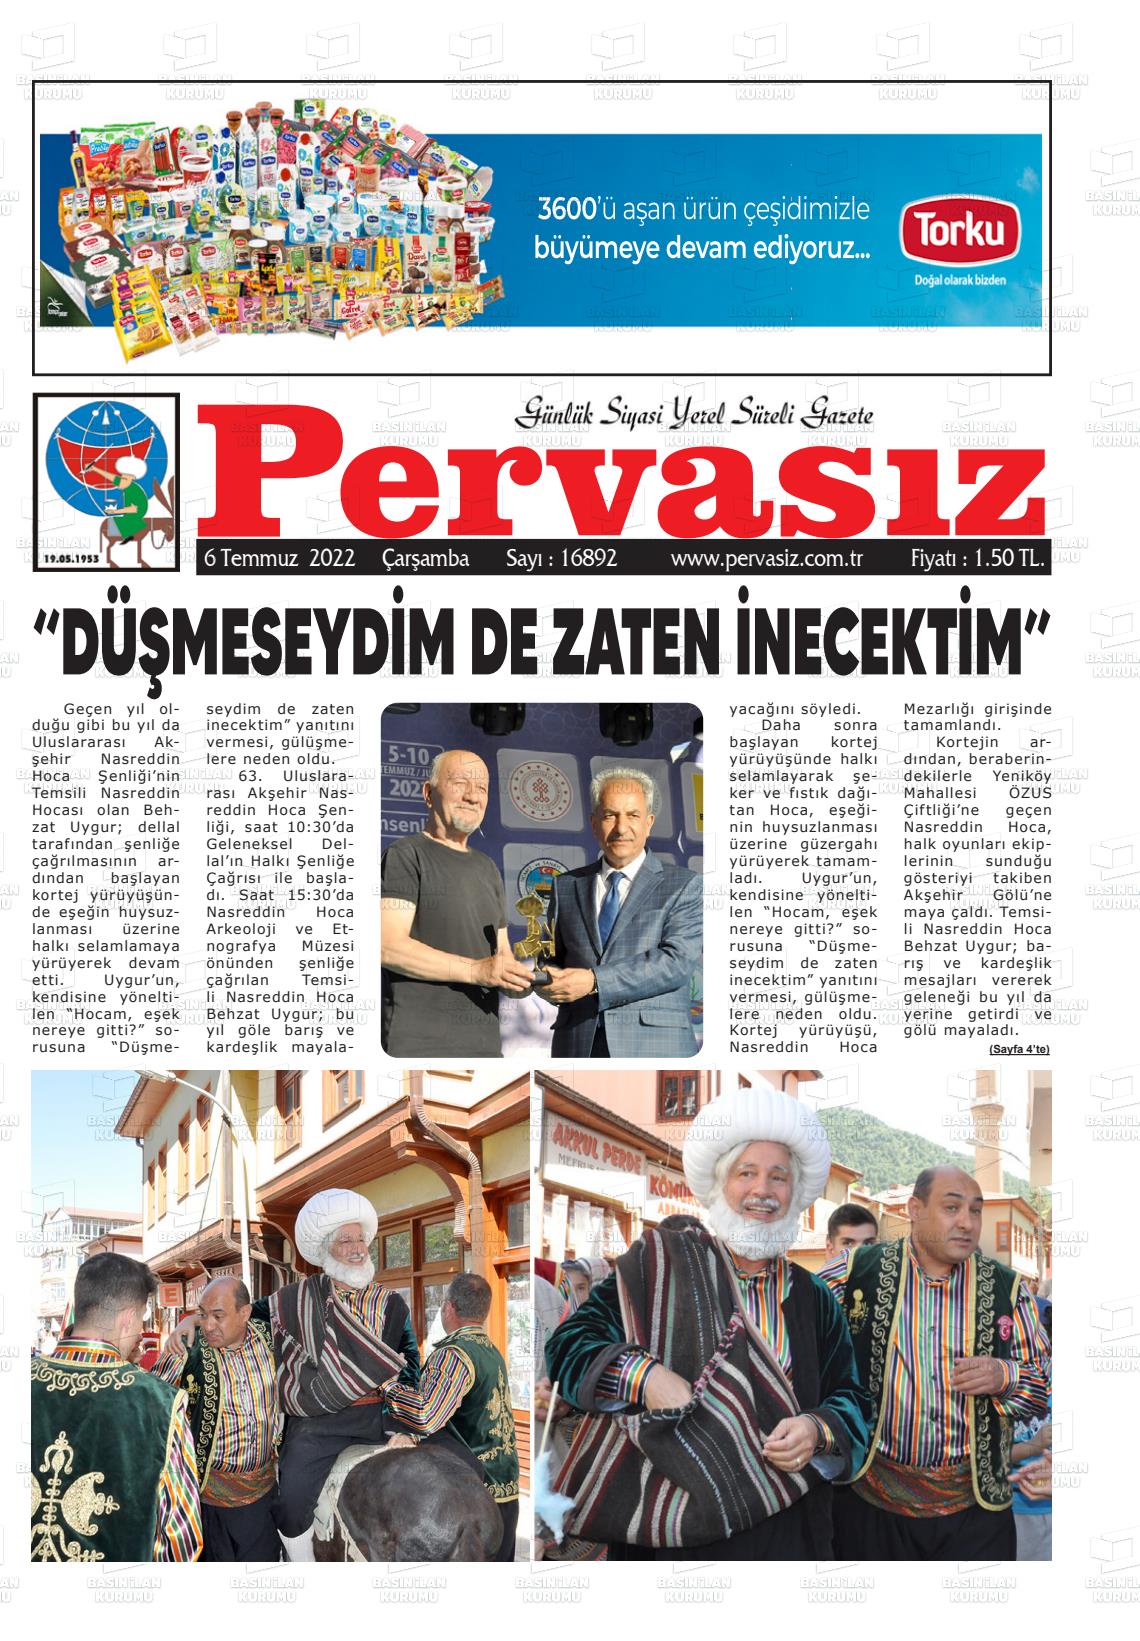 06 Temmuz 2022 Konya Pervasız Gazete Manşeti